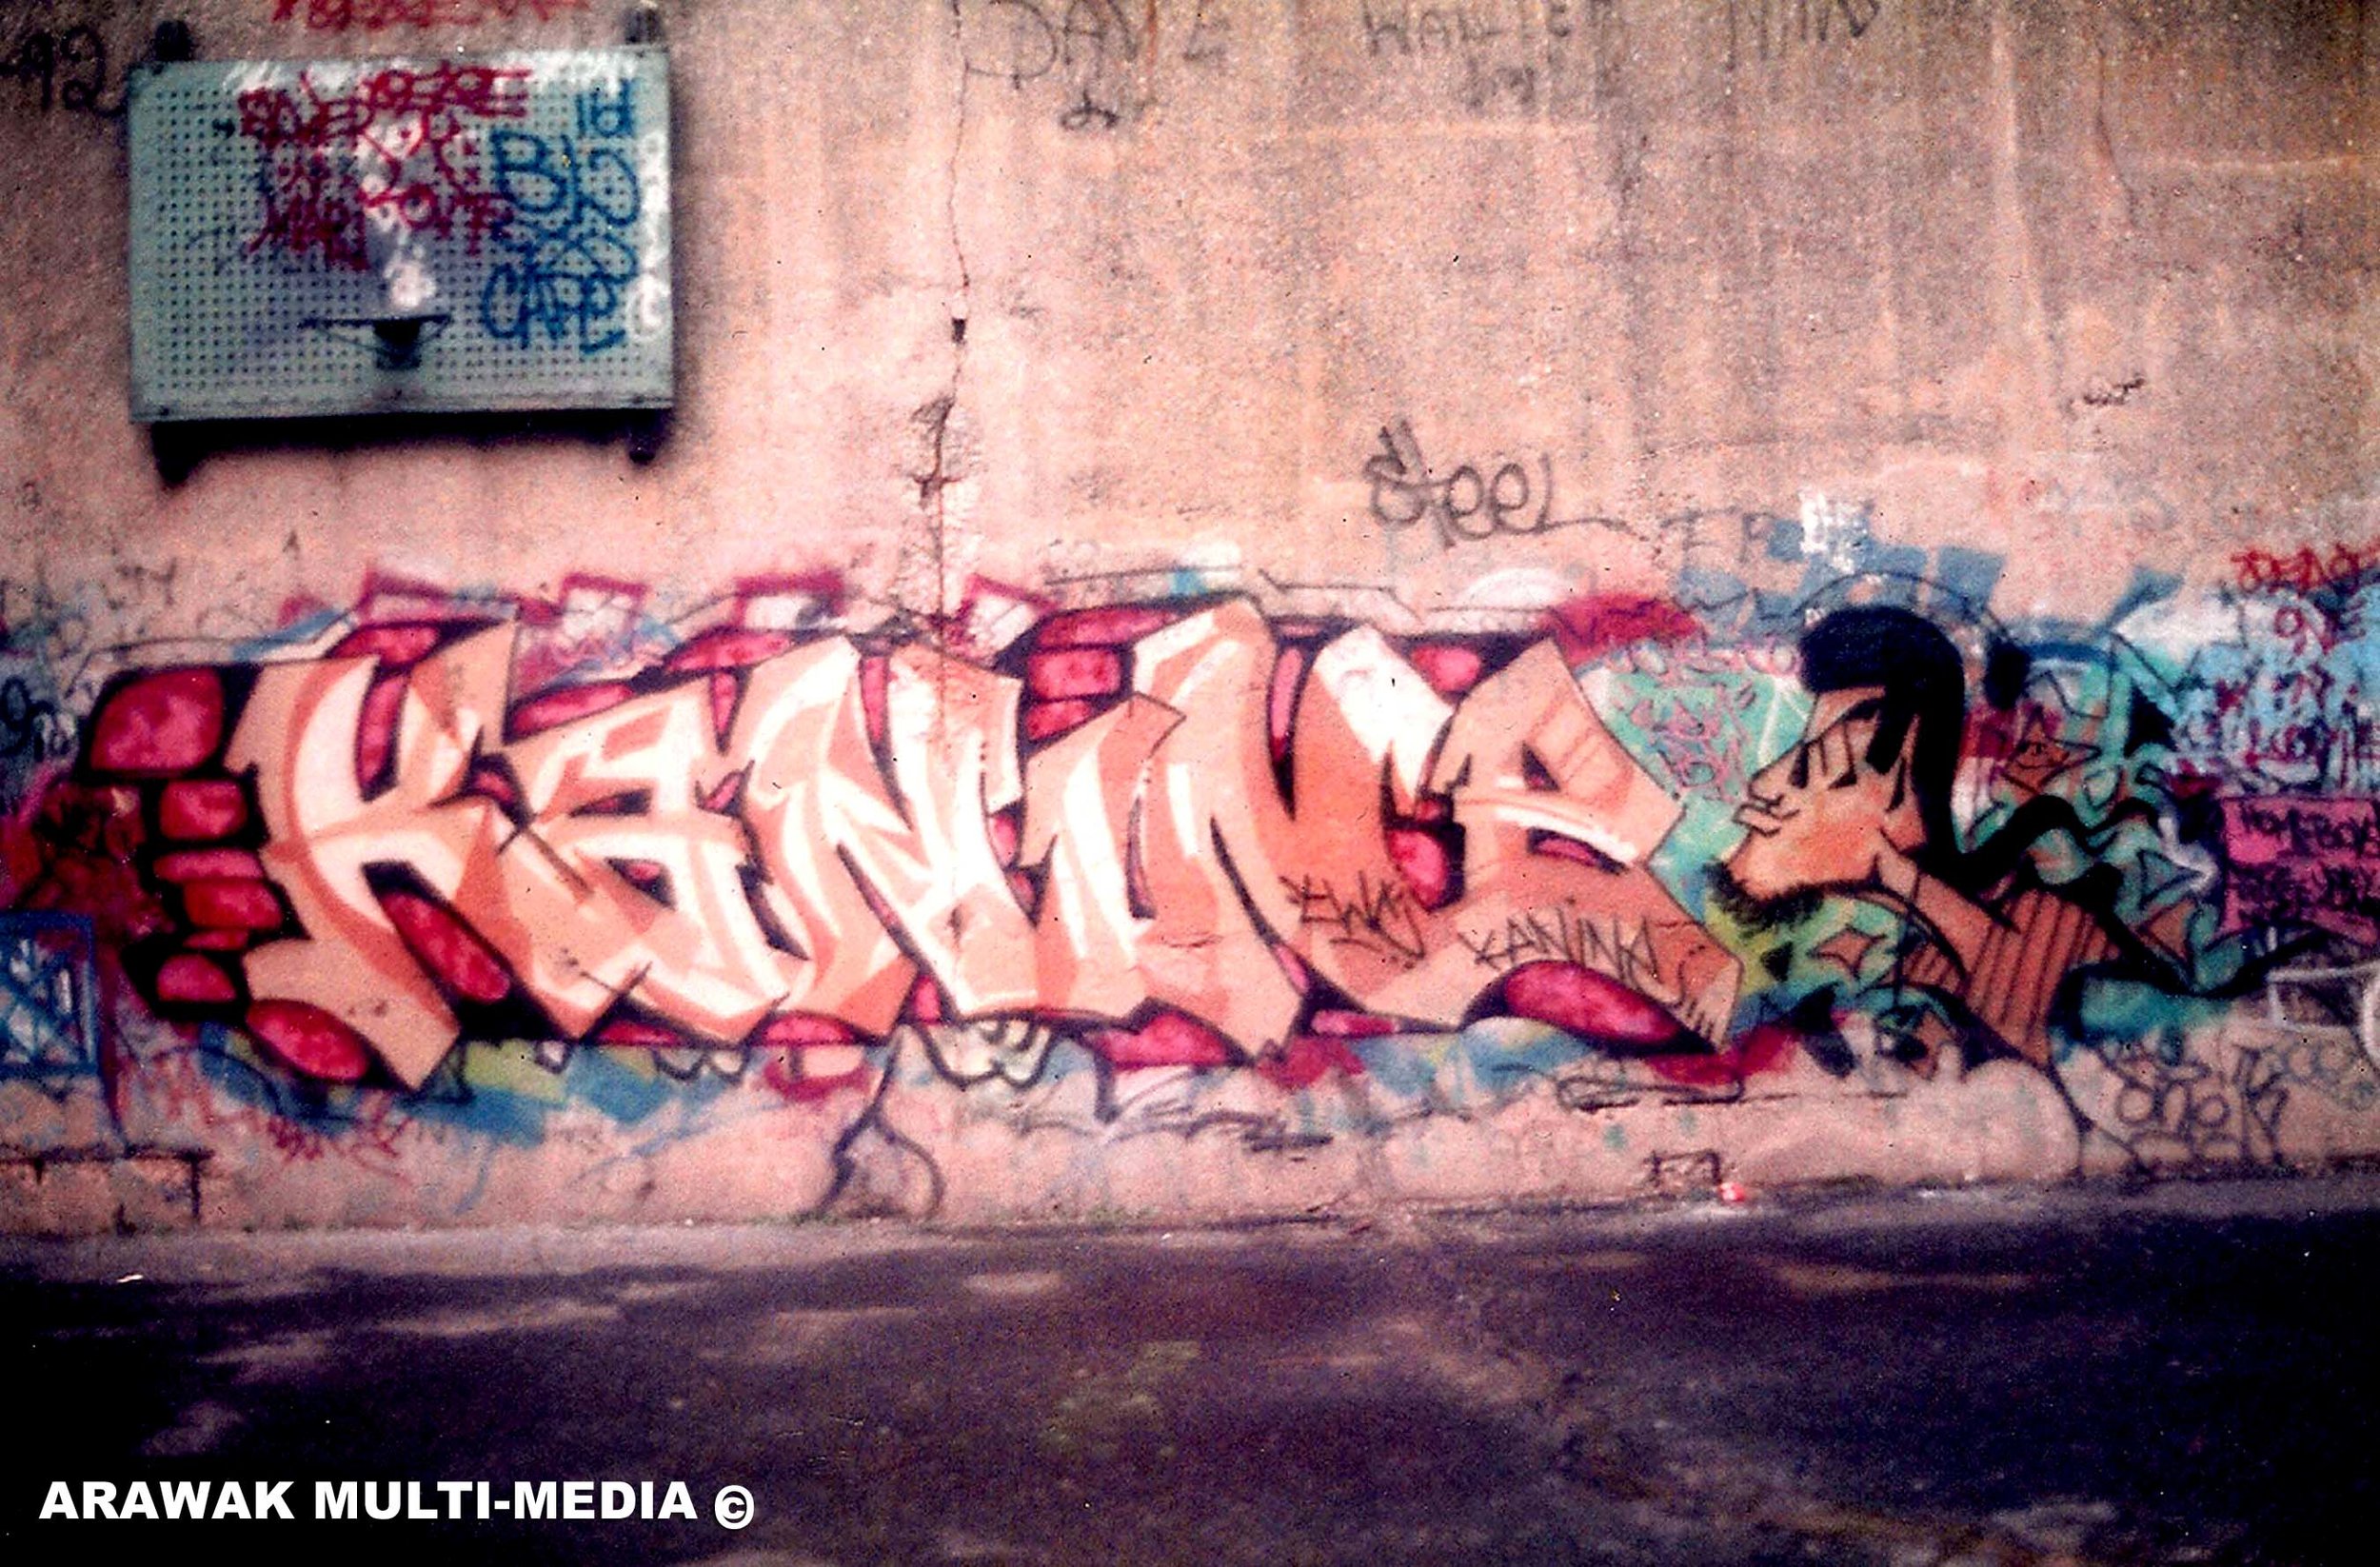 NYC Wall 009 Kanine by Sen (1).jpg